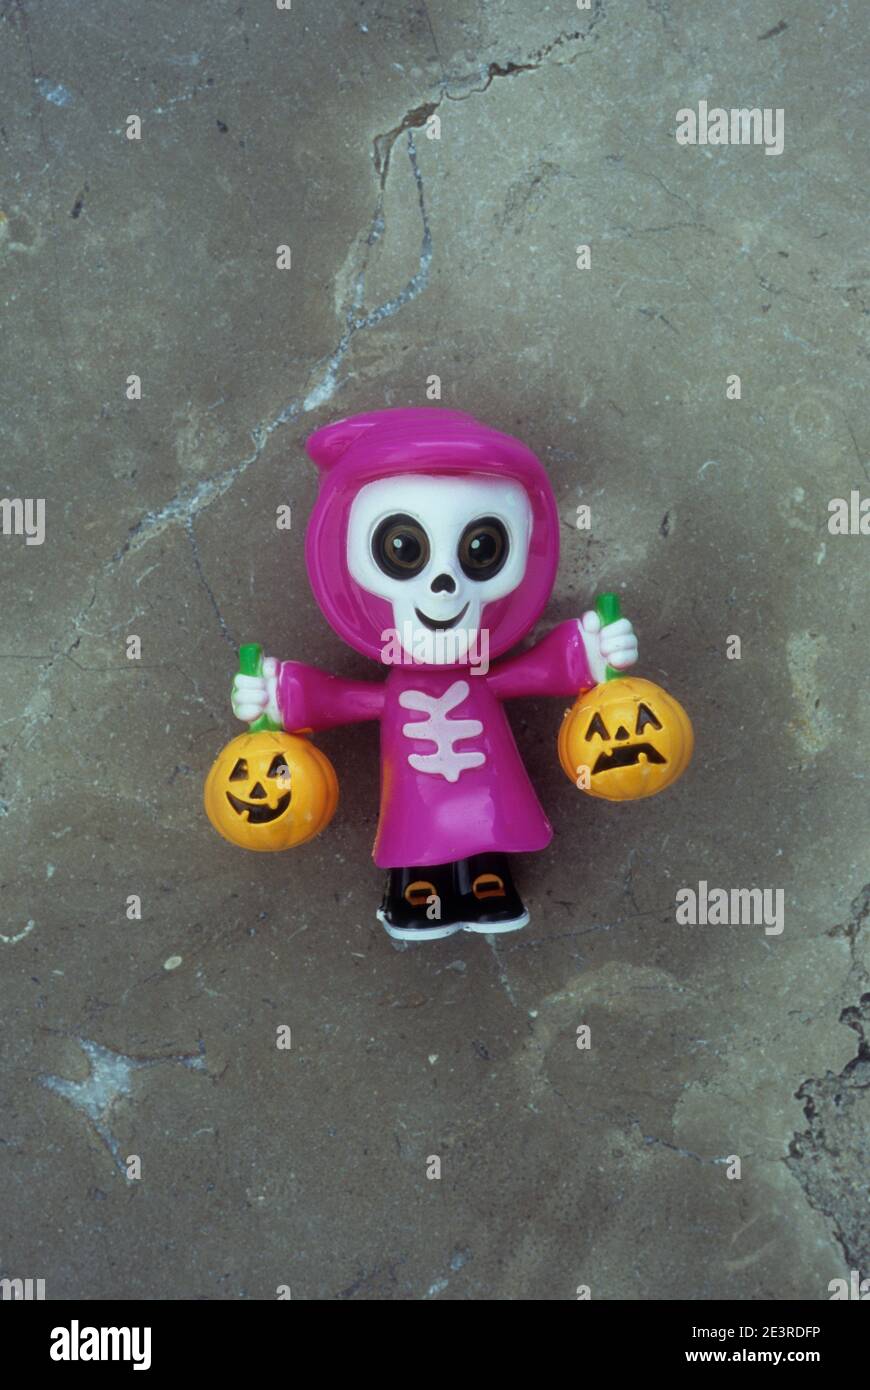 Plastic model of joke human skeleton with smiling skull wearing pink hooded cloak and holding carved pumpkins Stock Photo